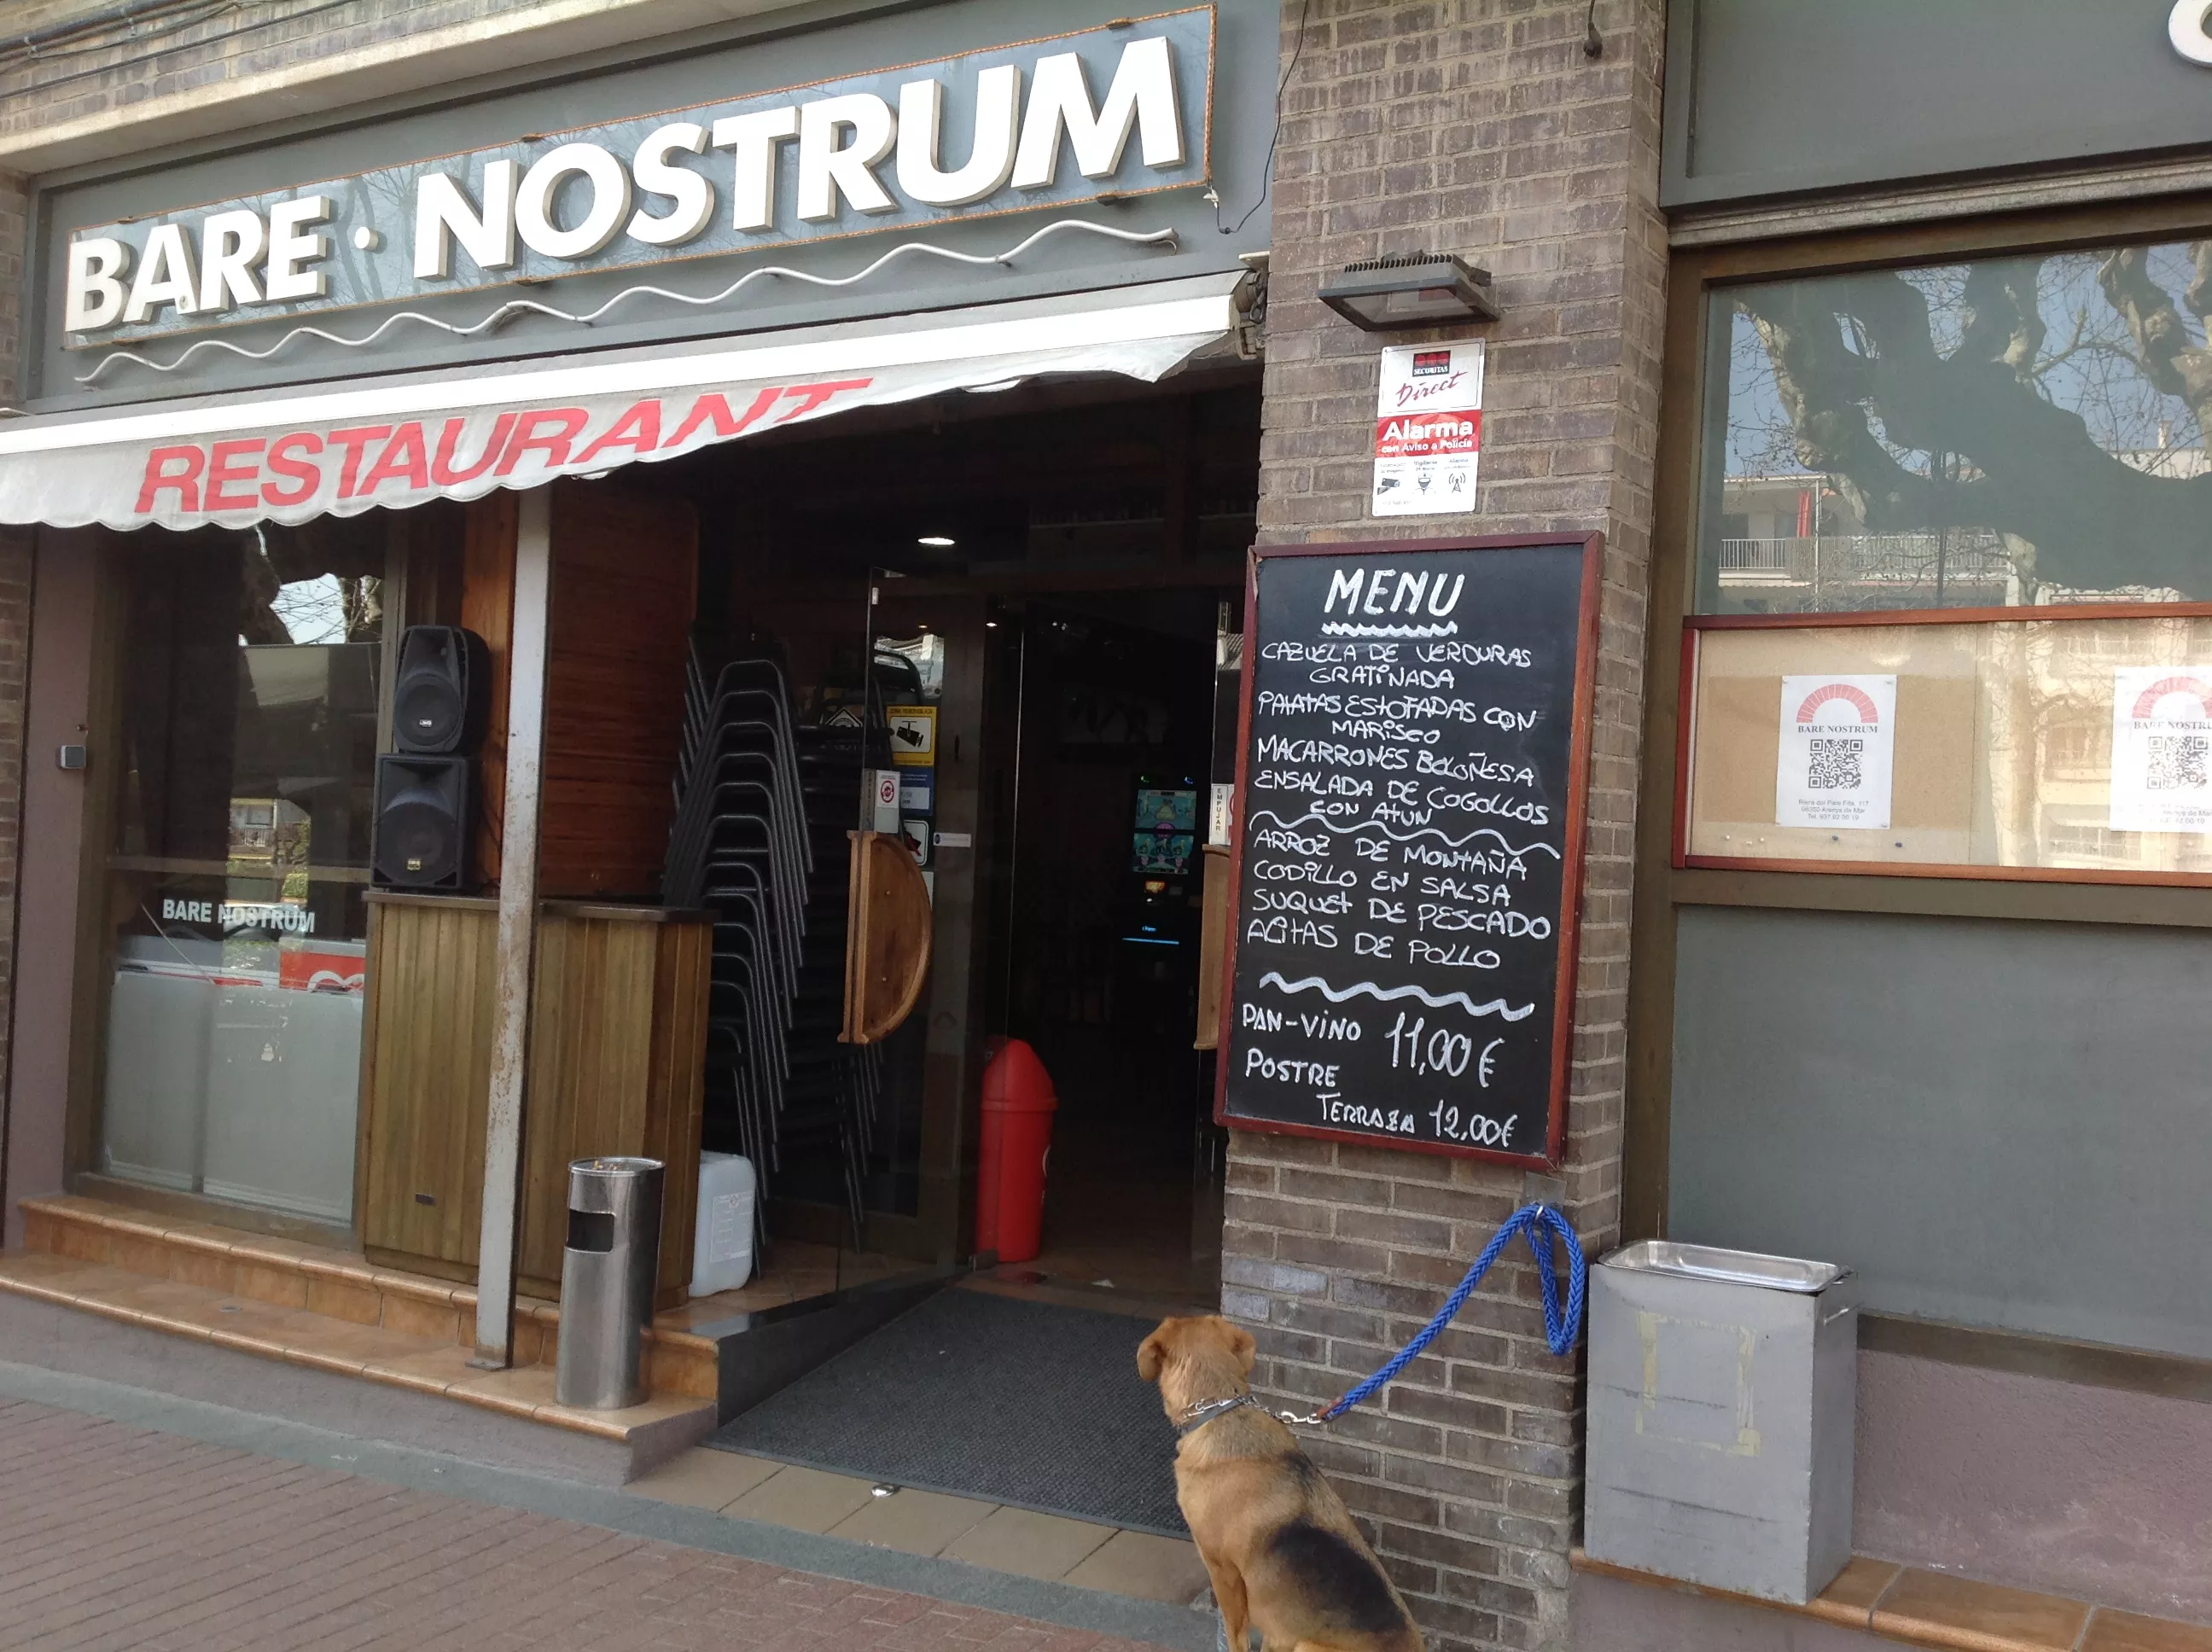 Bare Nostrum Bar in Spain, Europe | Bars,Billiards - Rated 3.5